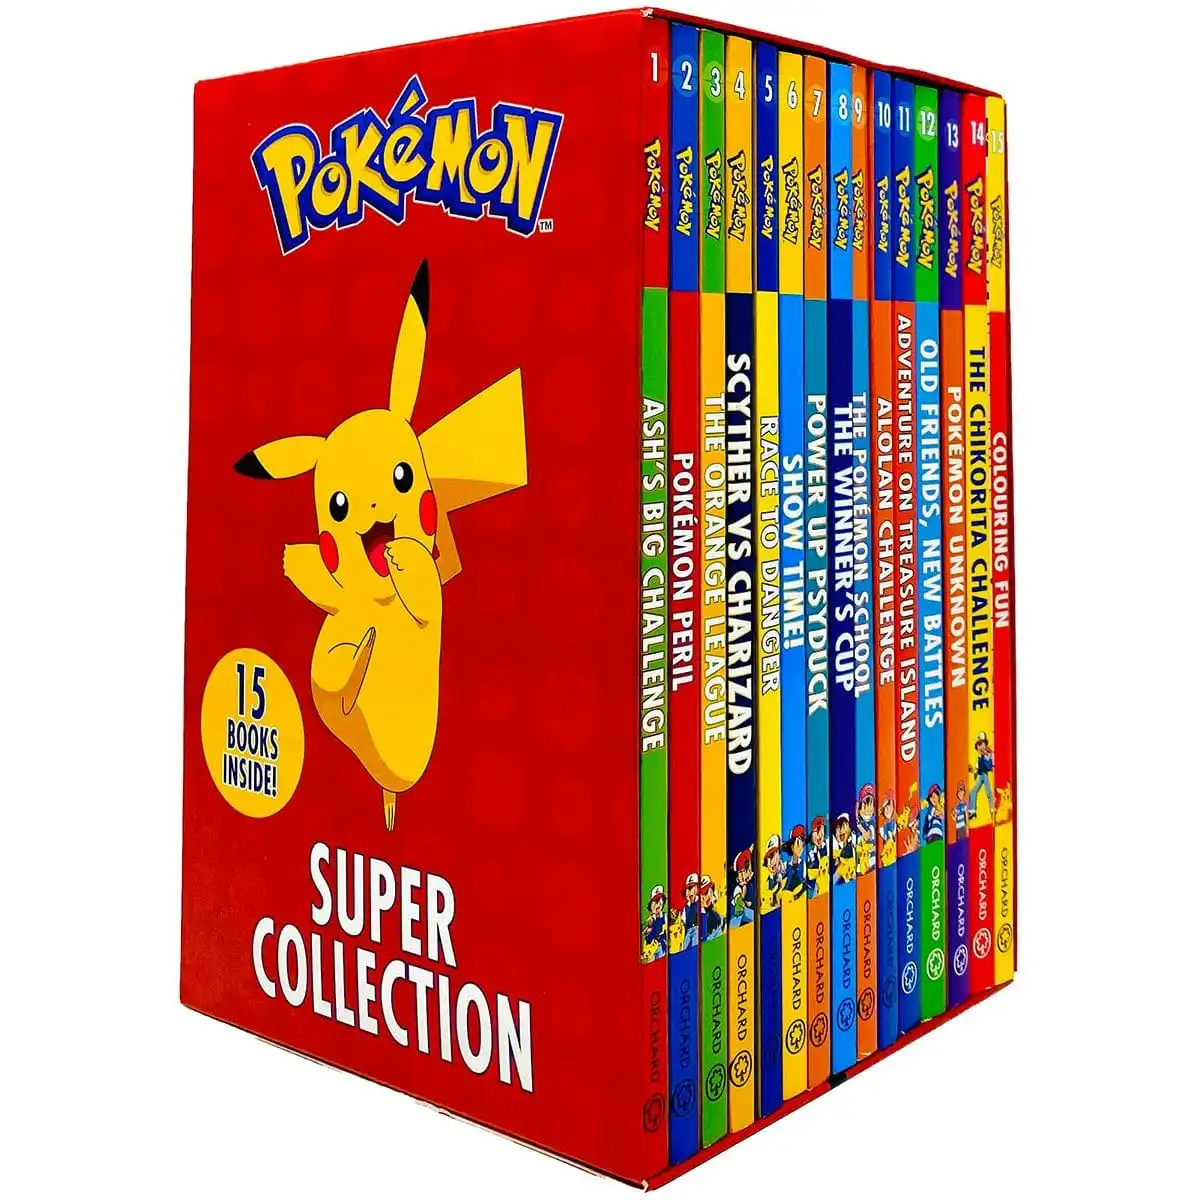 Pokemon Super Collection - 15 Copy Box Set